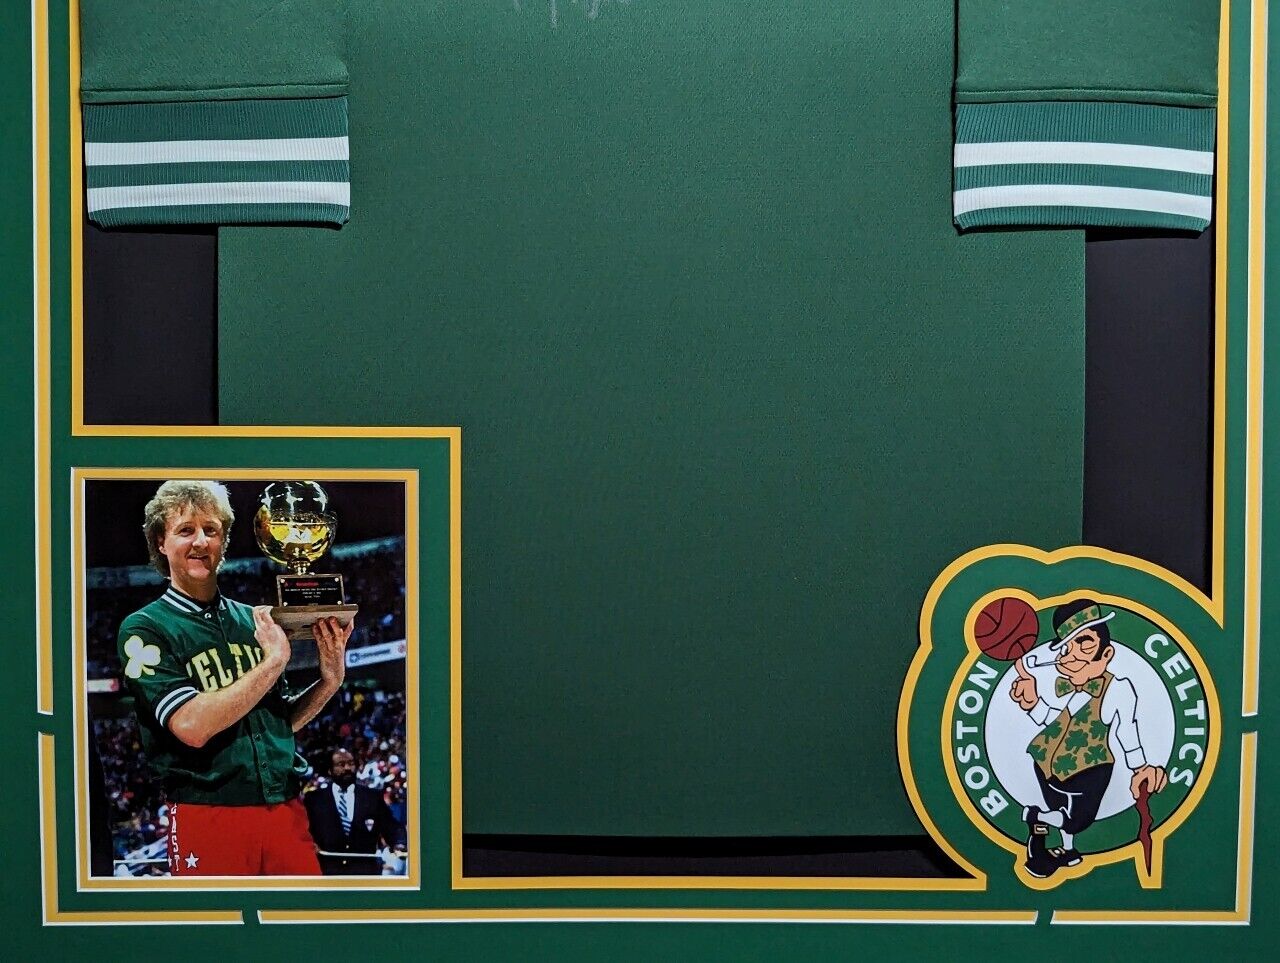 MVP Authentics Framed Boston Celtics Larry Bird Autographed Warm Up Jacket Larry Bird Holo 900 sports jersey framing , jersey framing